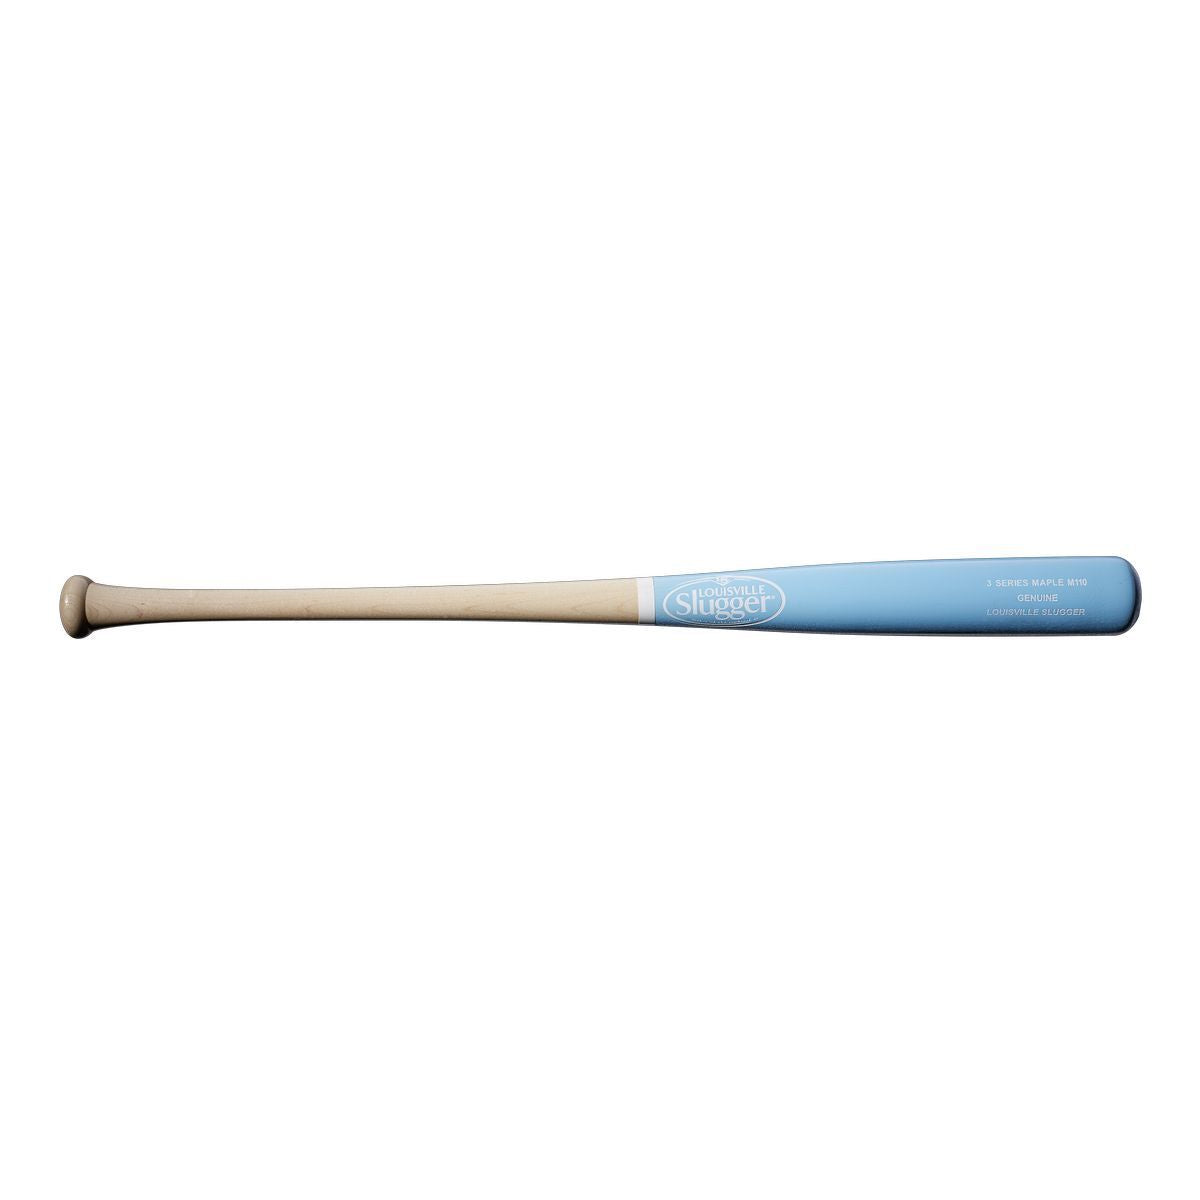 Louisville Slugger Genuine Mix Blue 34 Baseball Bat 